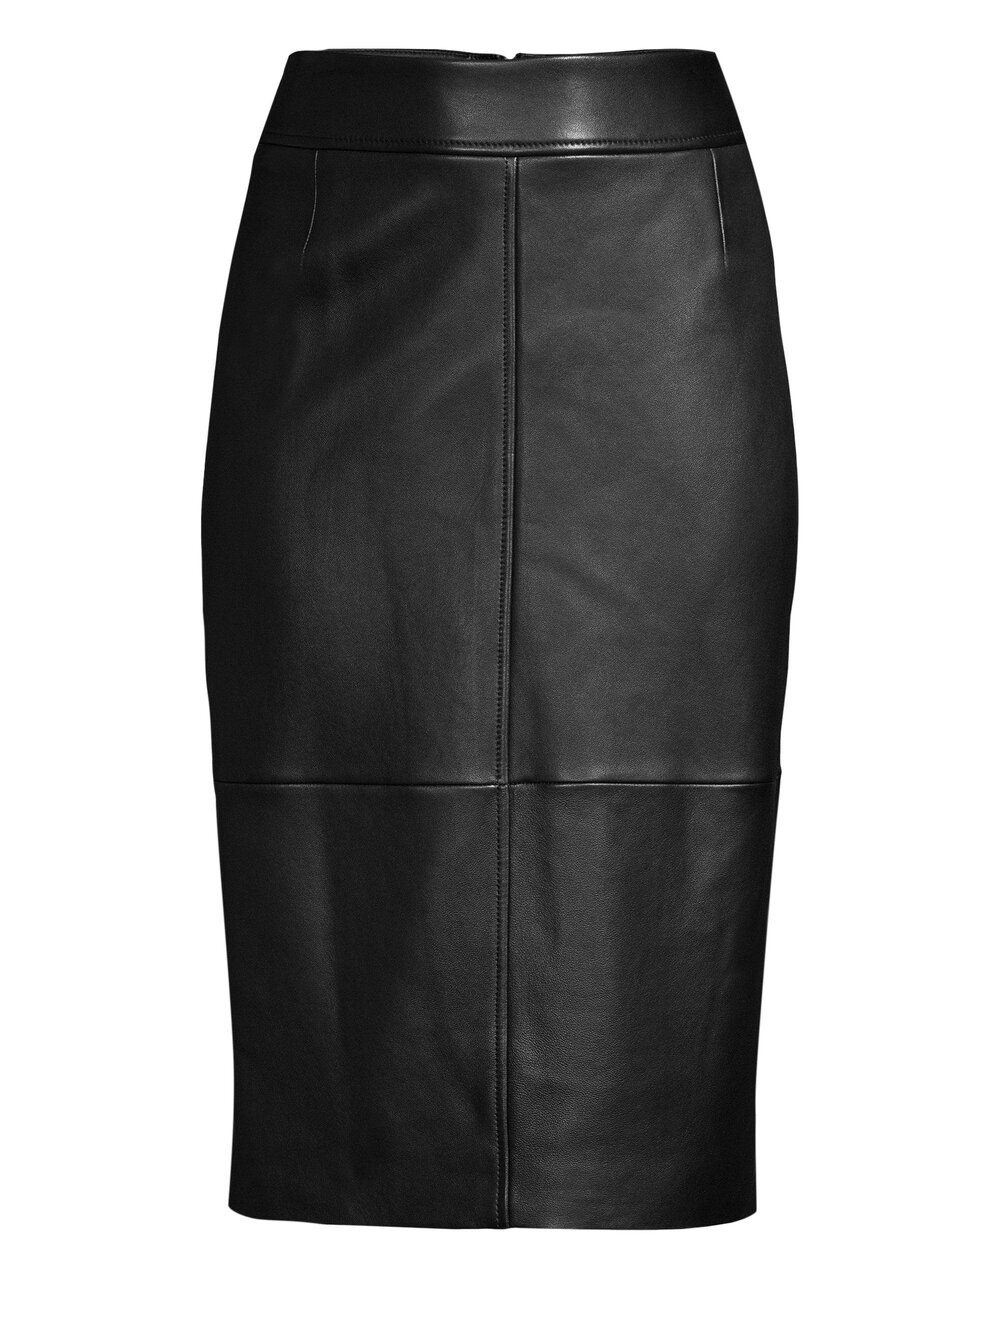 Hugo Boss Selrita Pencil Skirt in Black Lambskin-Leather — UFO No More